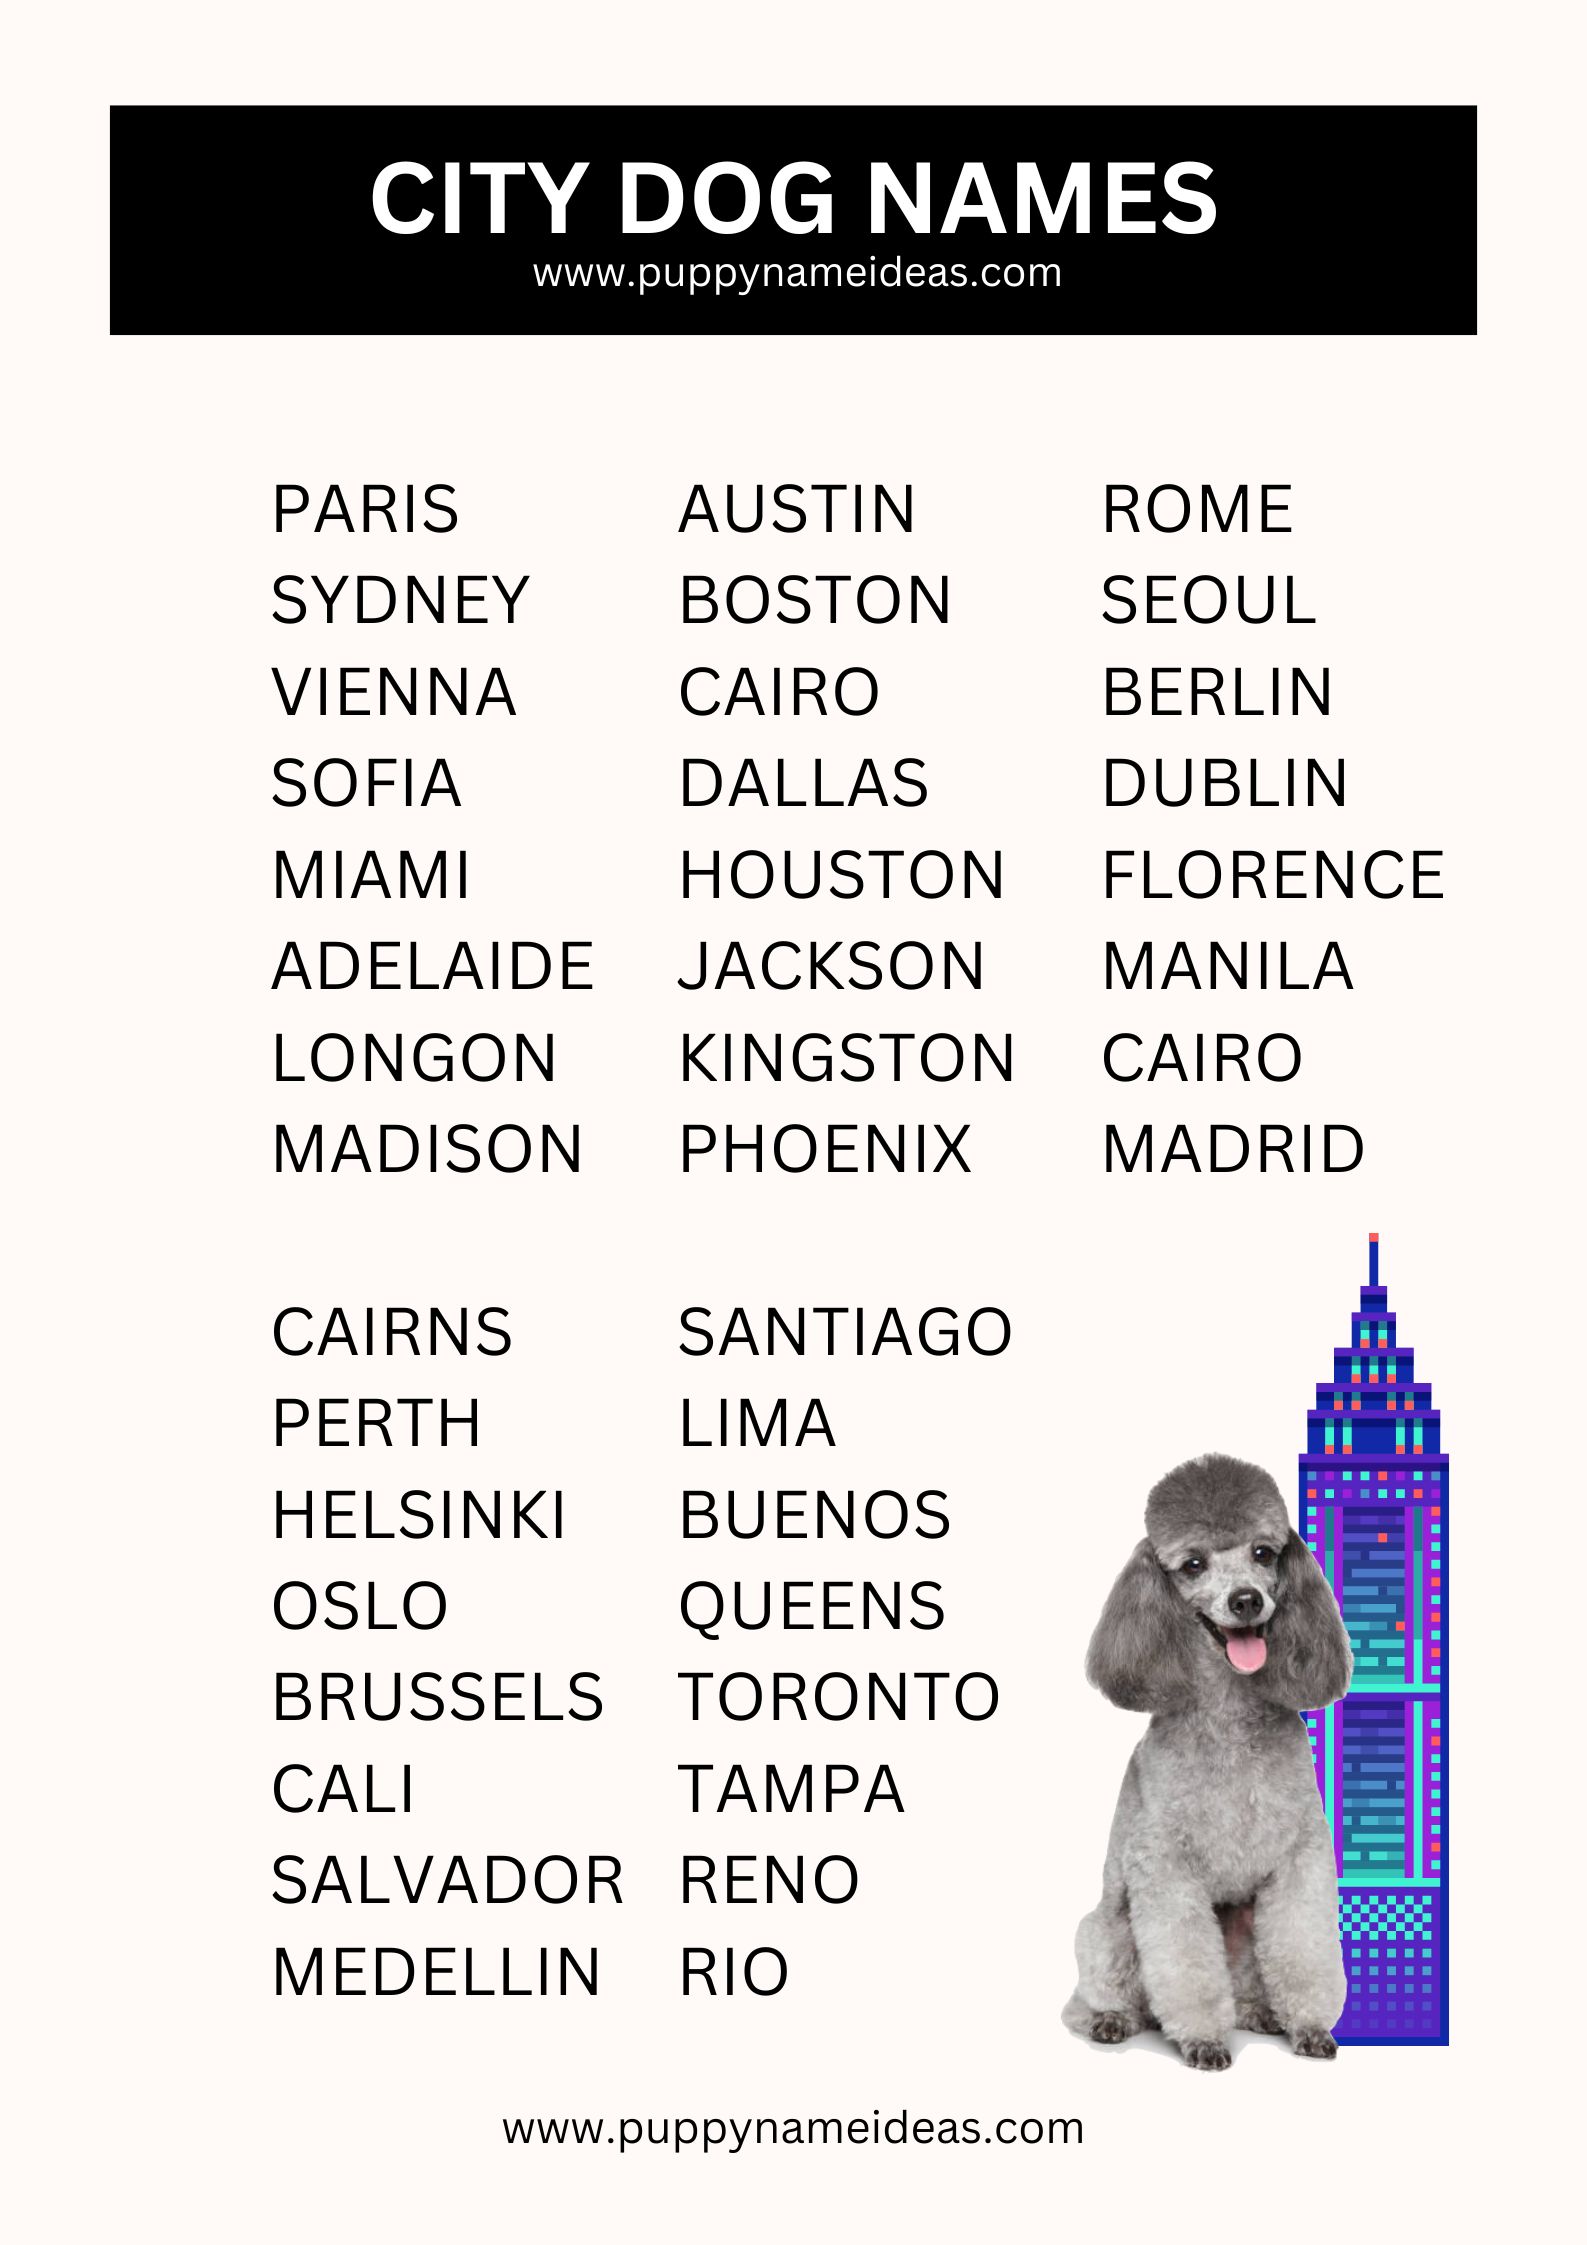 list of city dog names